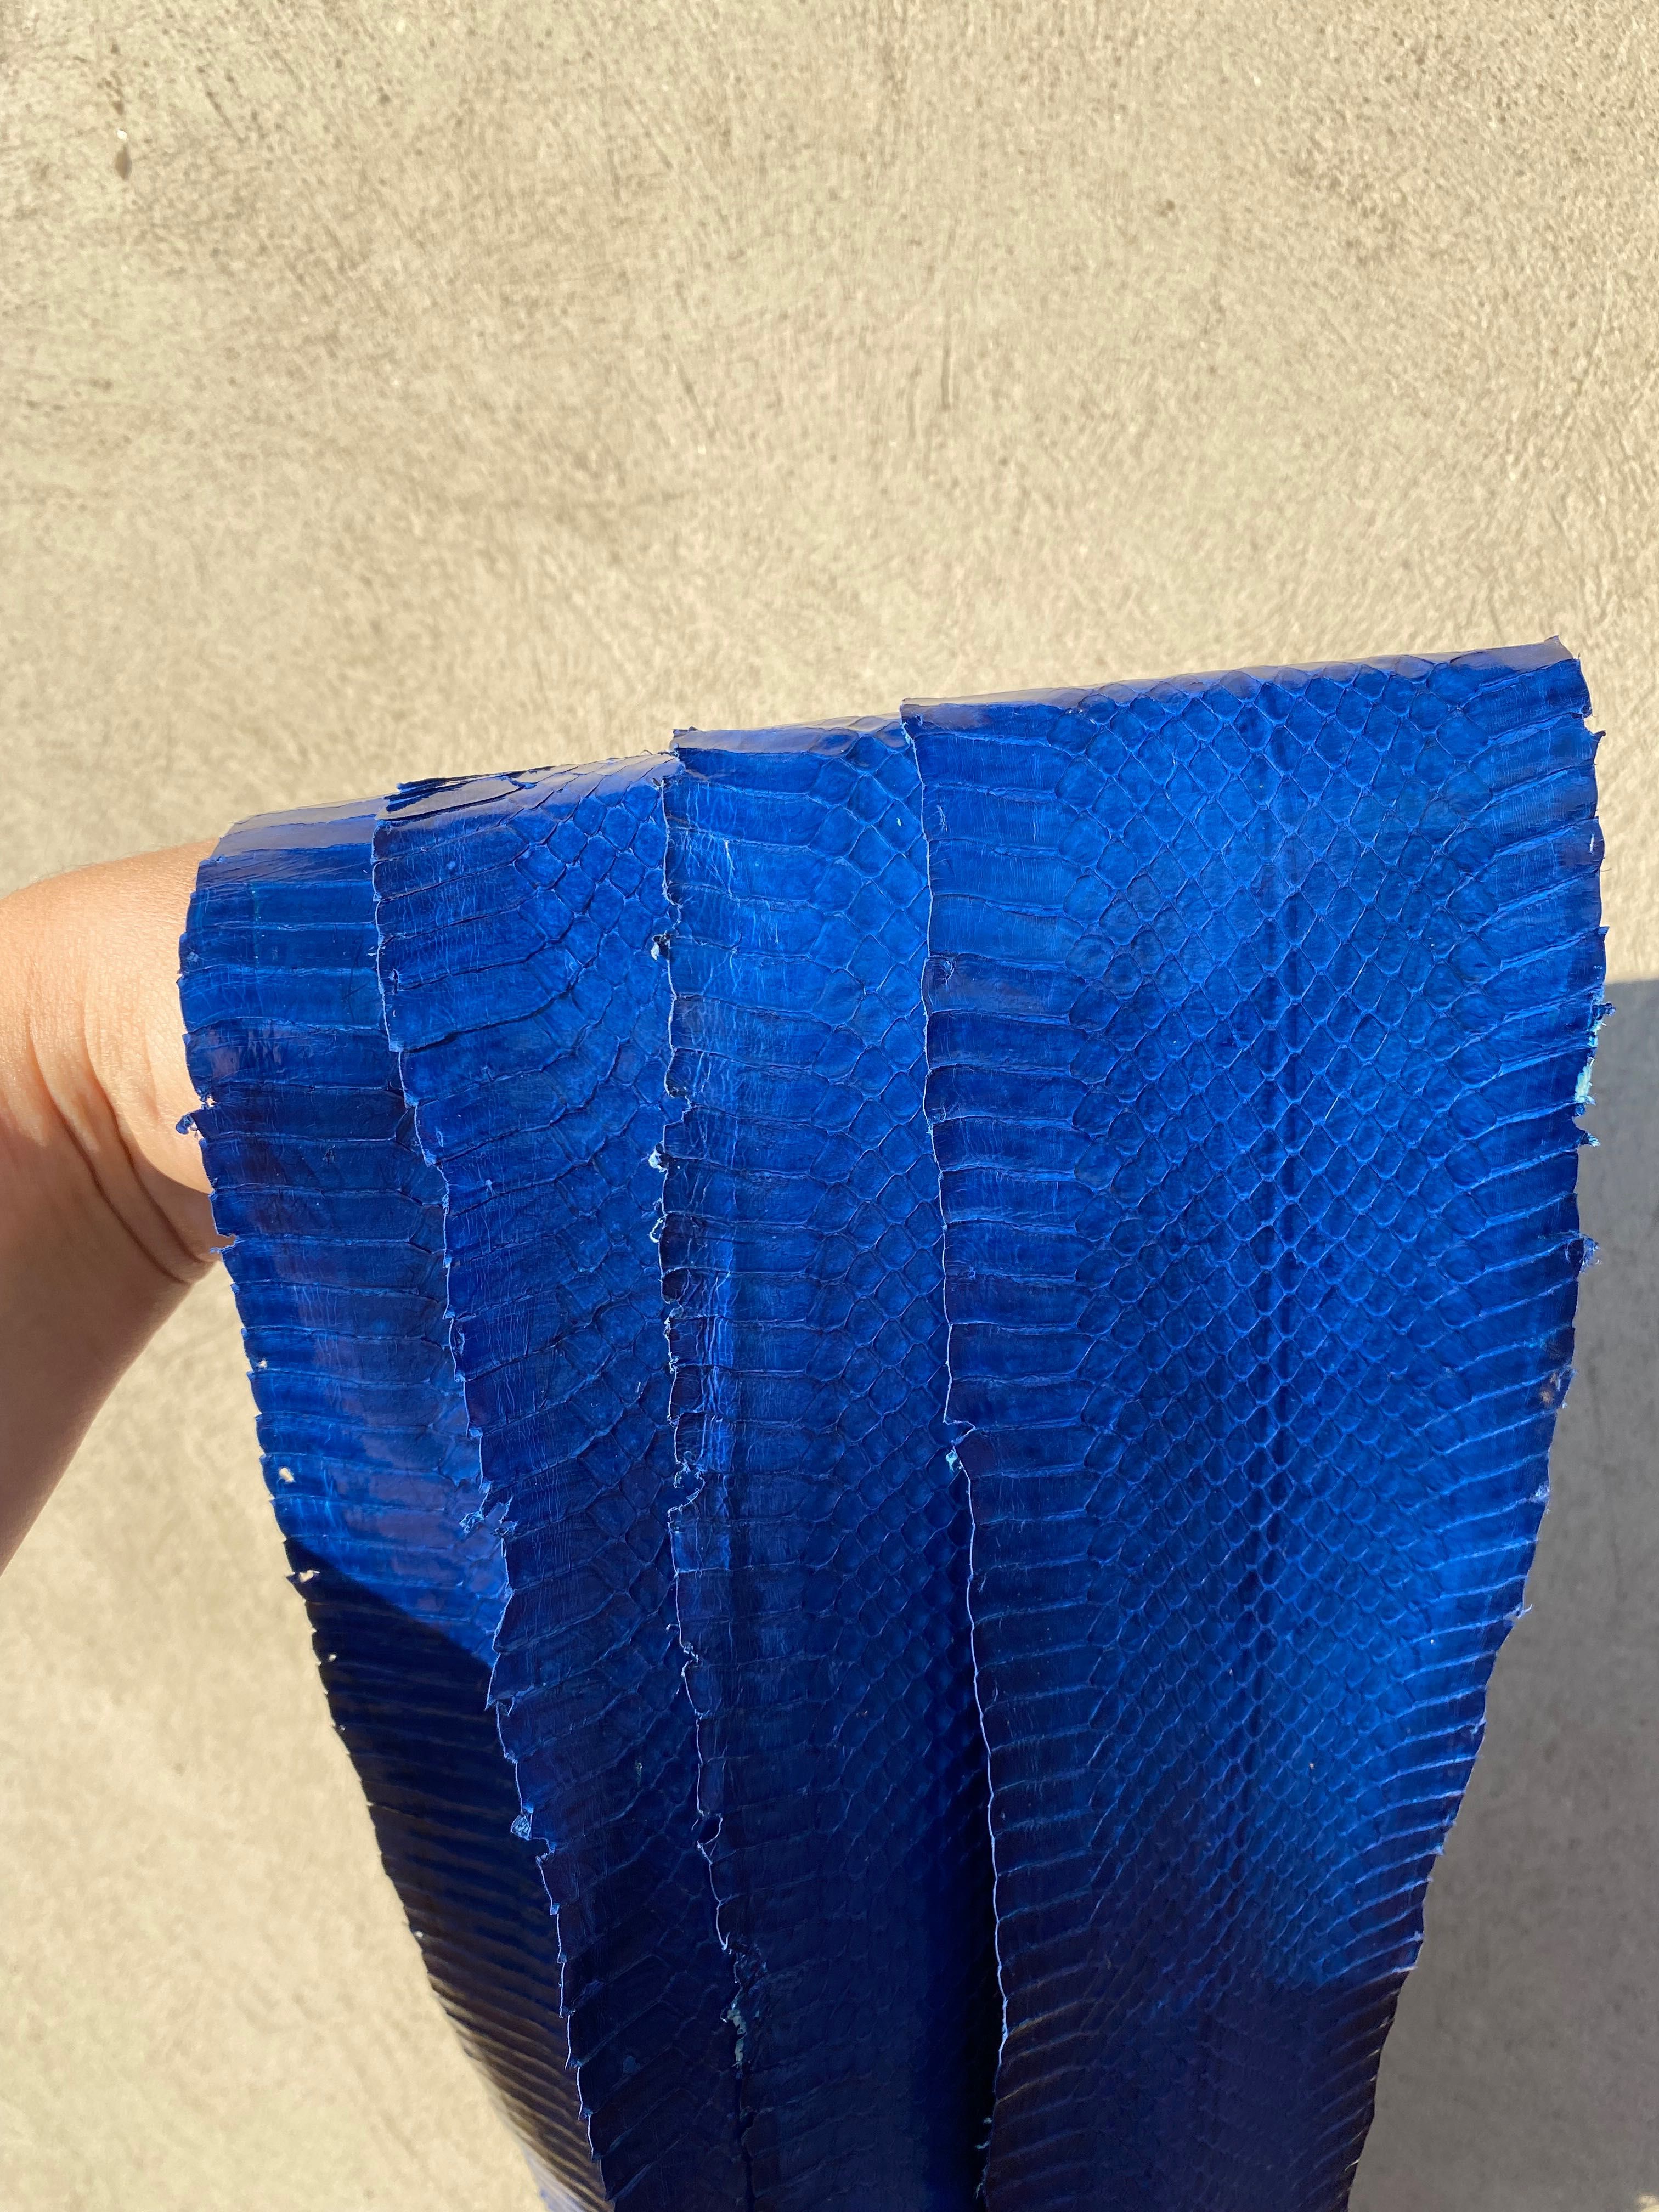 Piele sarpe albastru albastra - 200 RON fasia 105x9 cm